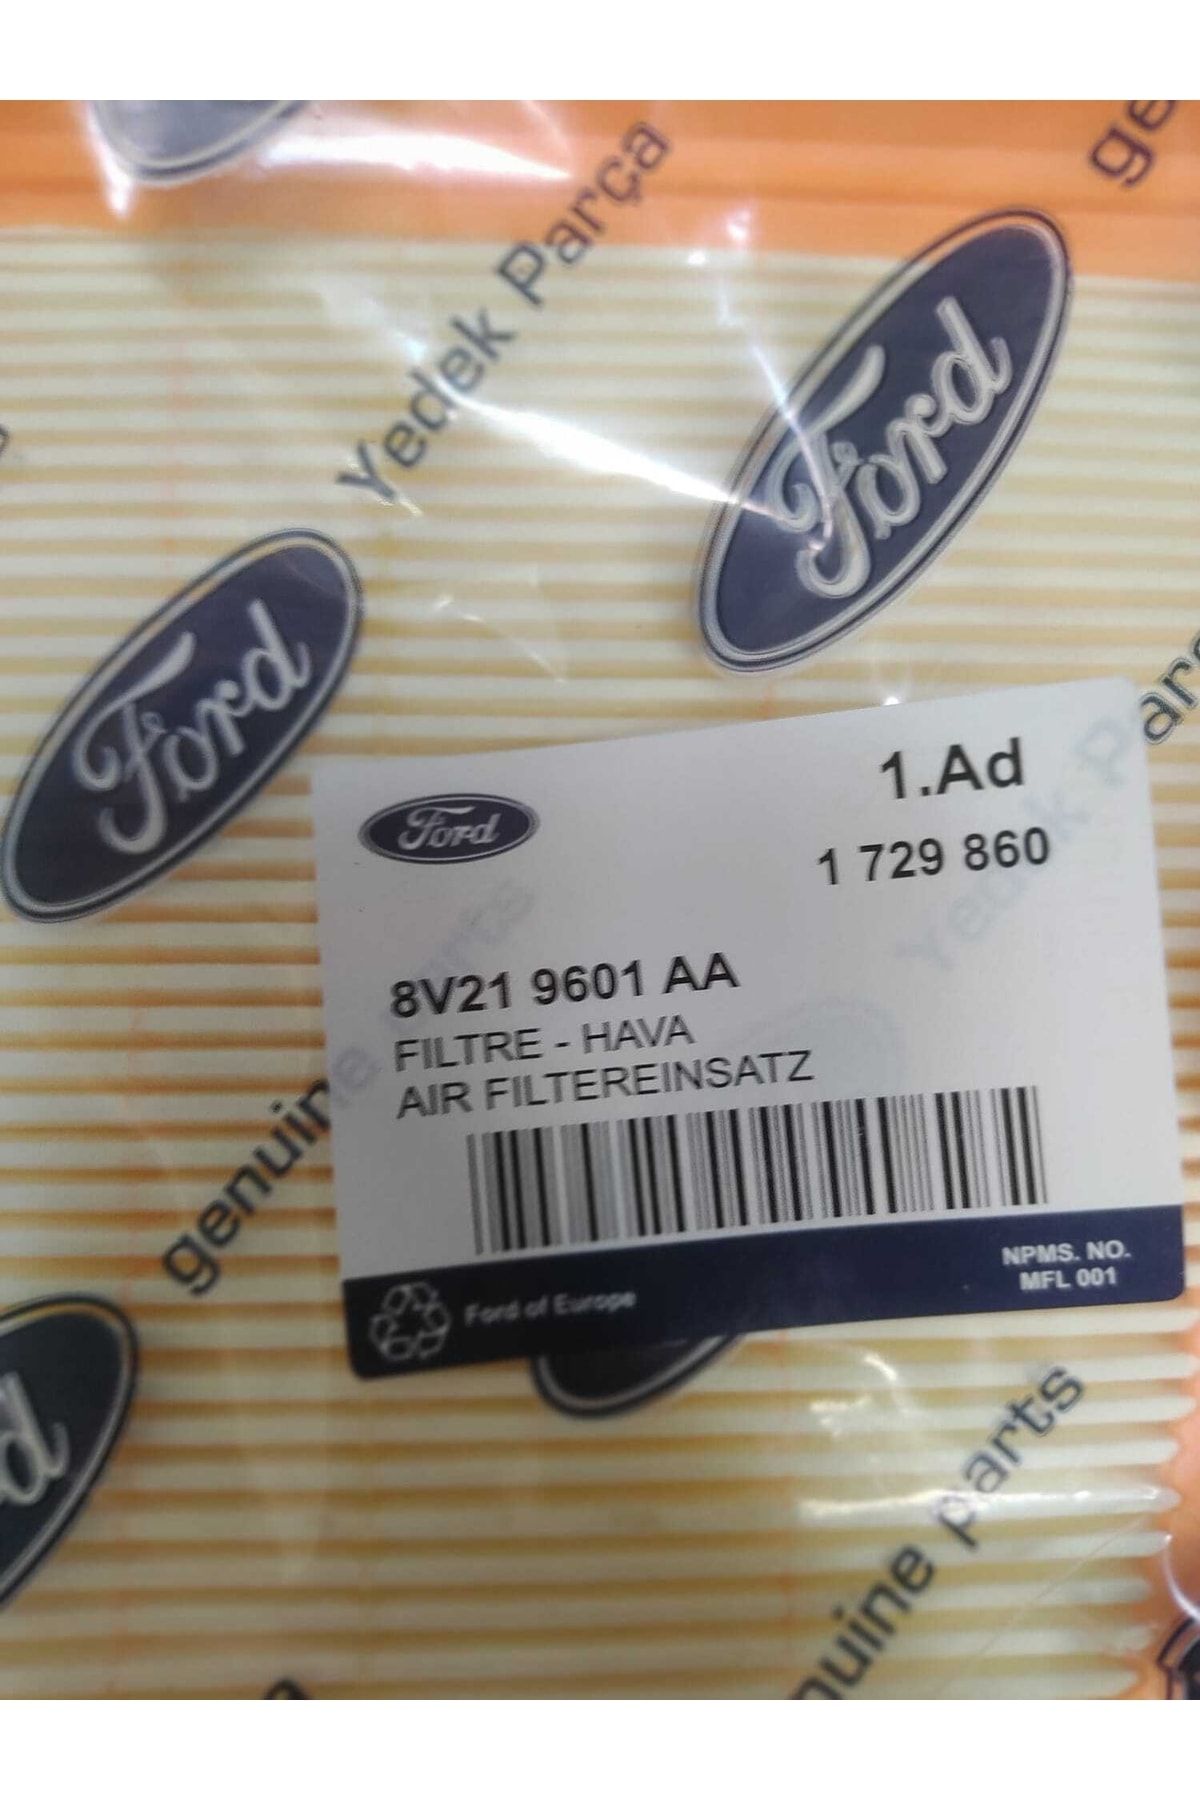 Fiesta Ford 1.4 Tdcı Hava Filtresi 8v219601aa 1729860 Wk879513 Hp 2281